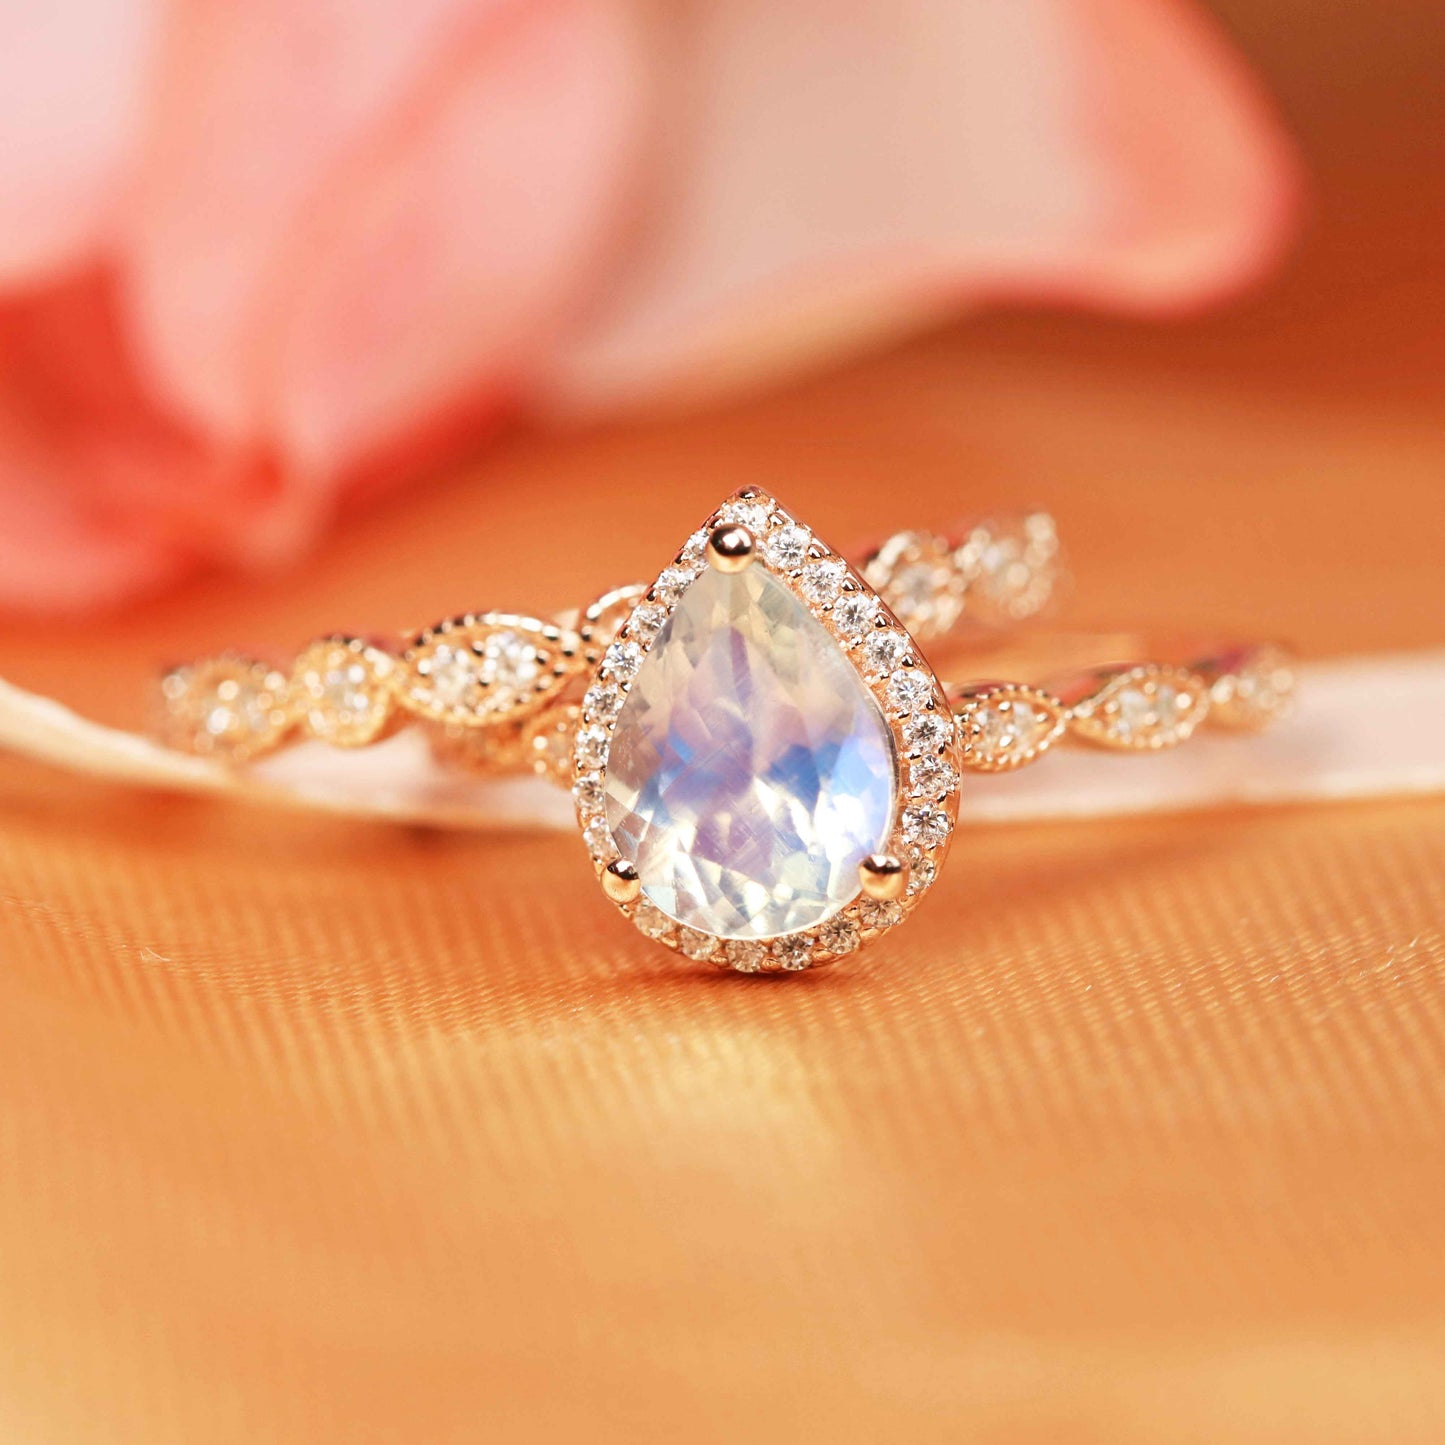 Vintage Halo 1.5 carat pear shape Rainbow Moonstone Wedding Ring Set in Rose Gold